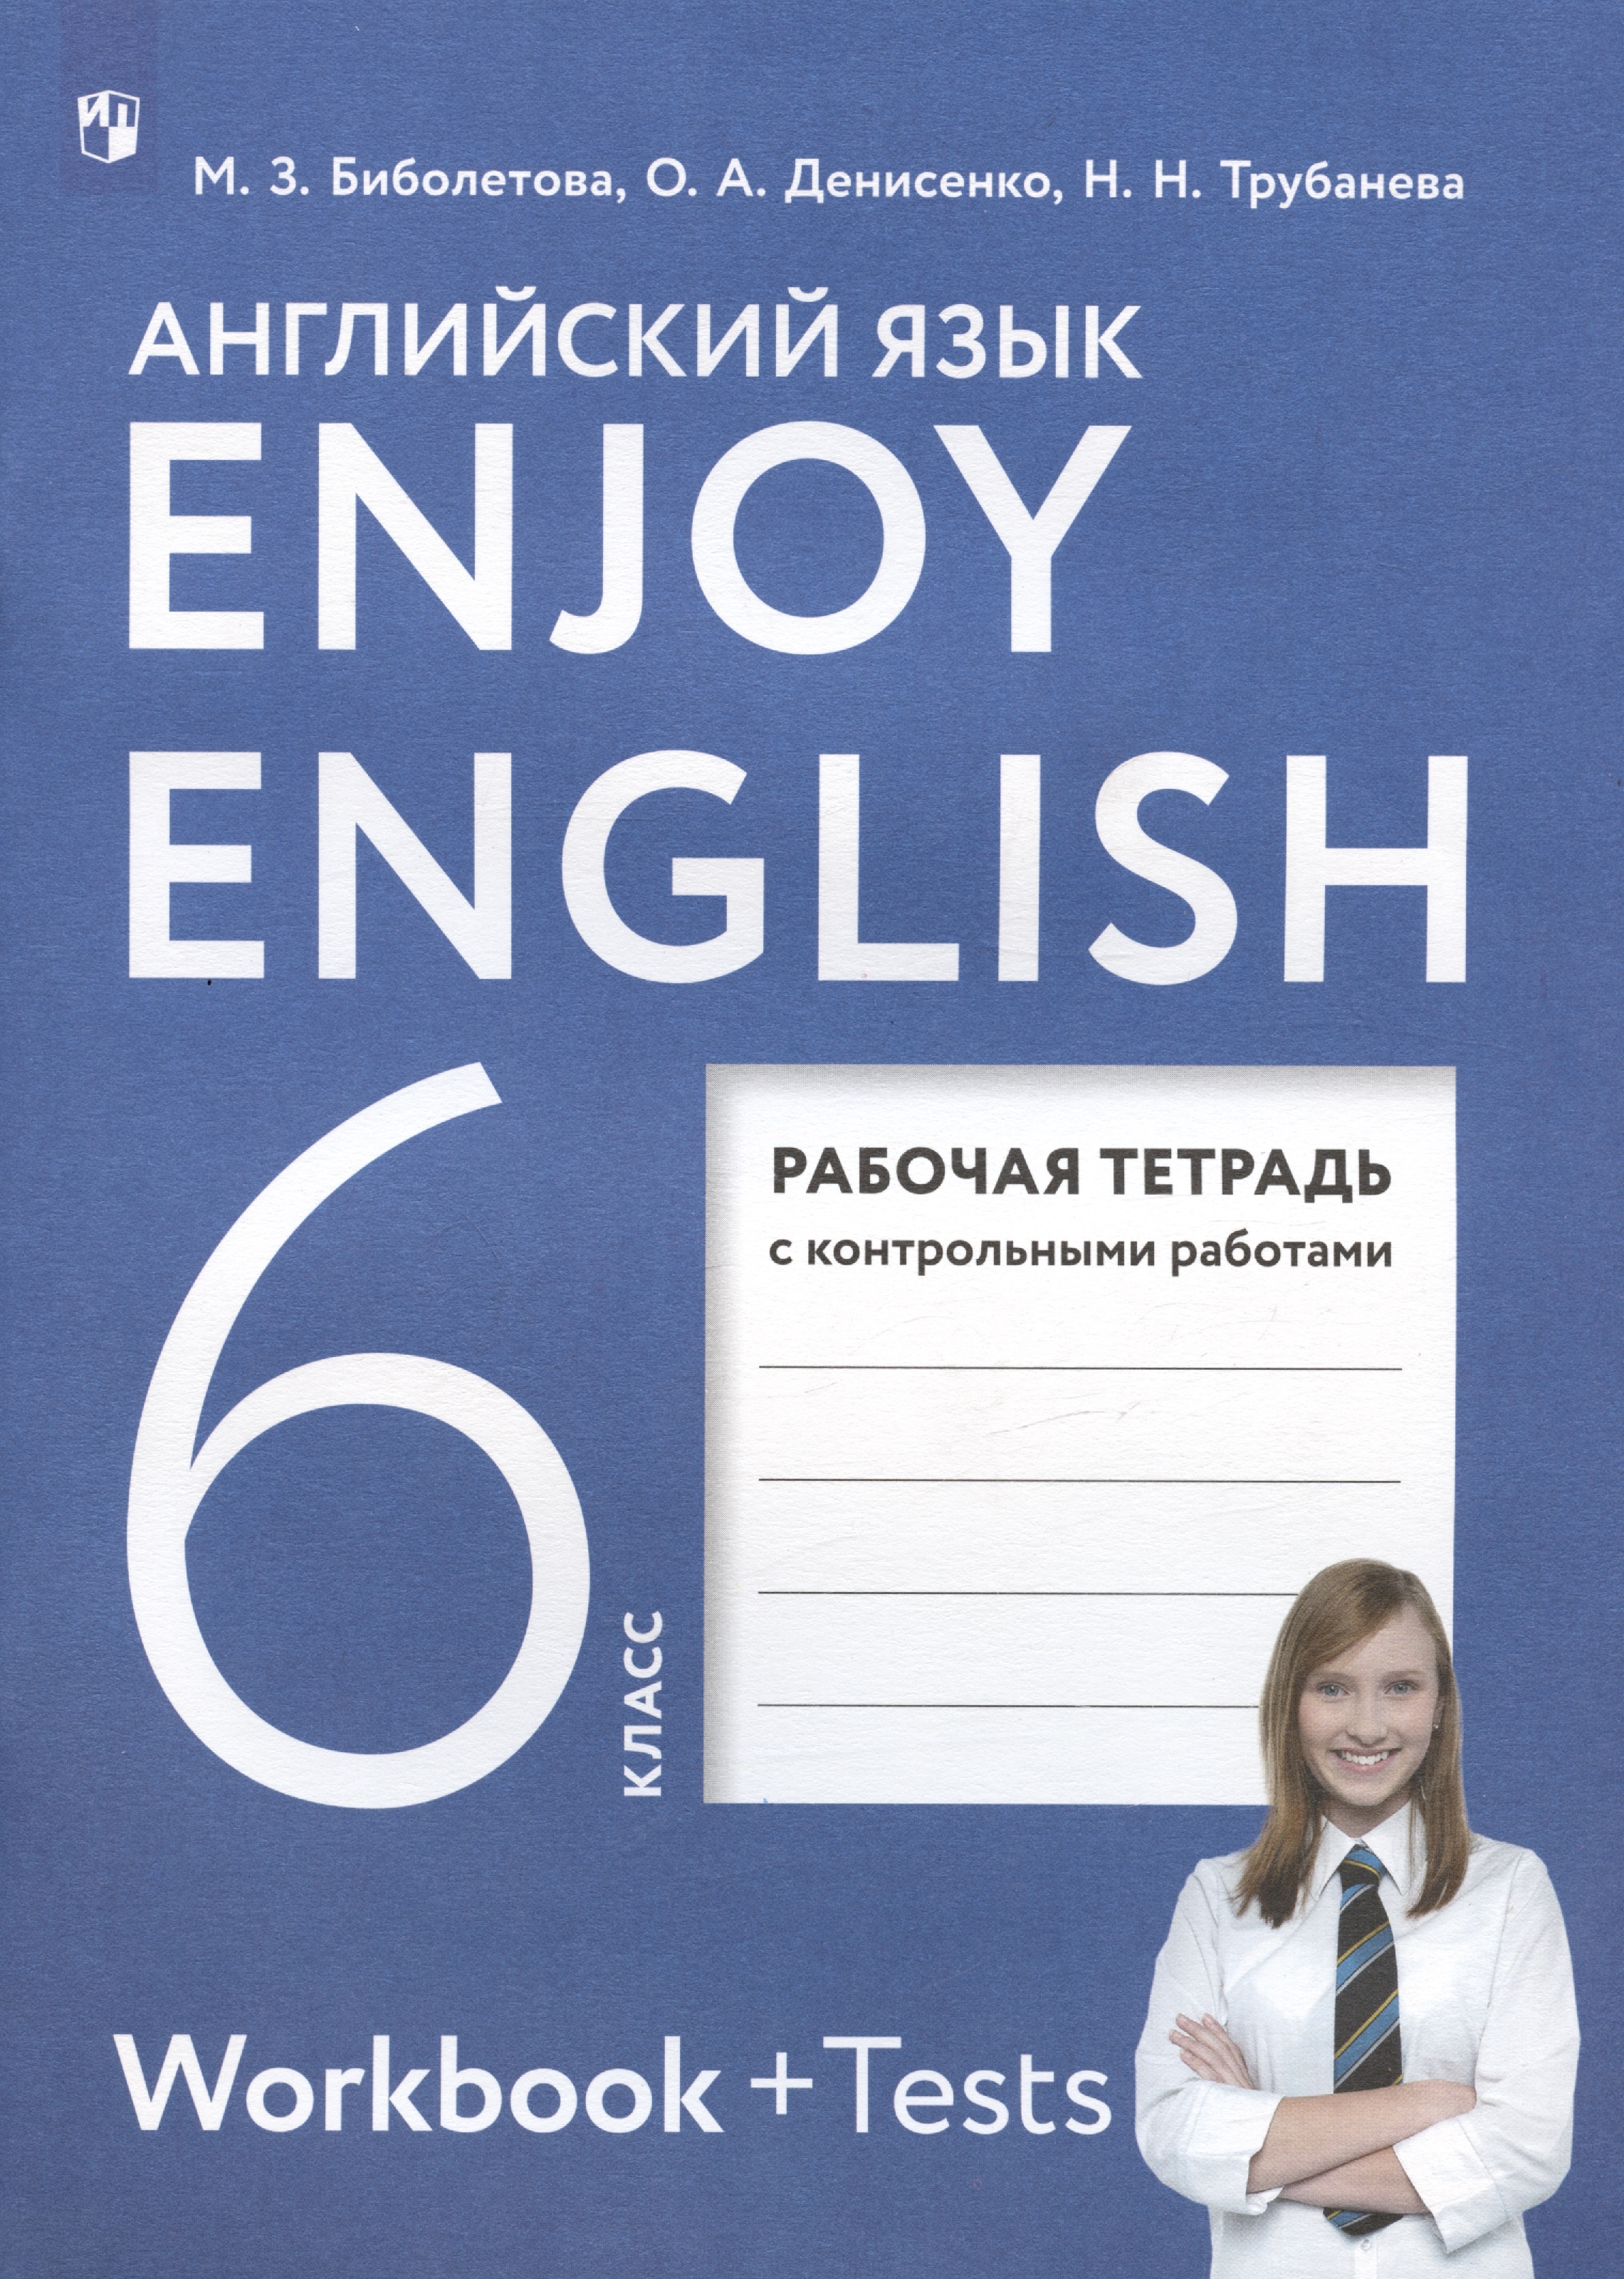 Enjoy English.  . 6 .     